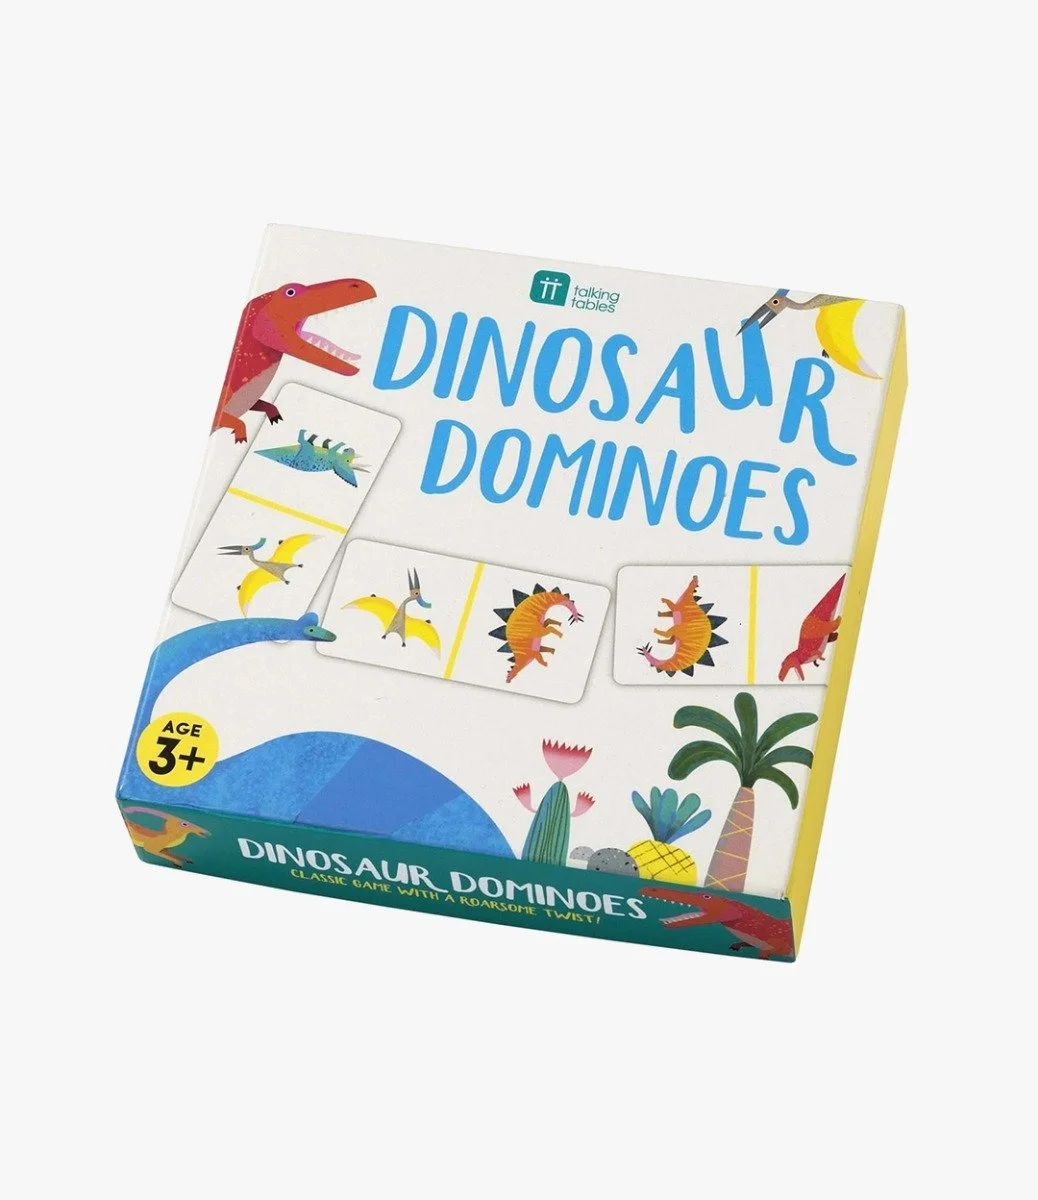 لعبة دومينو ديناصور من توكينج تيبلز 